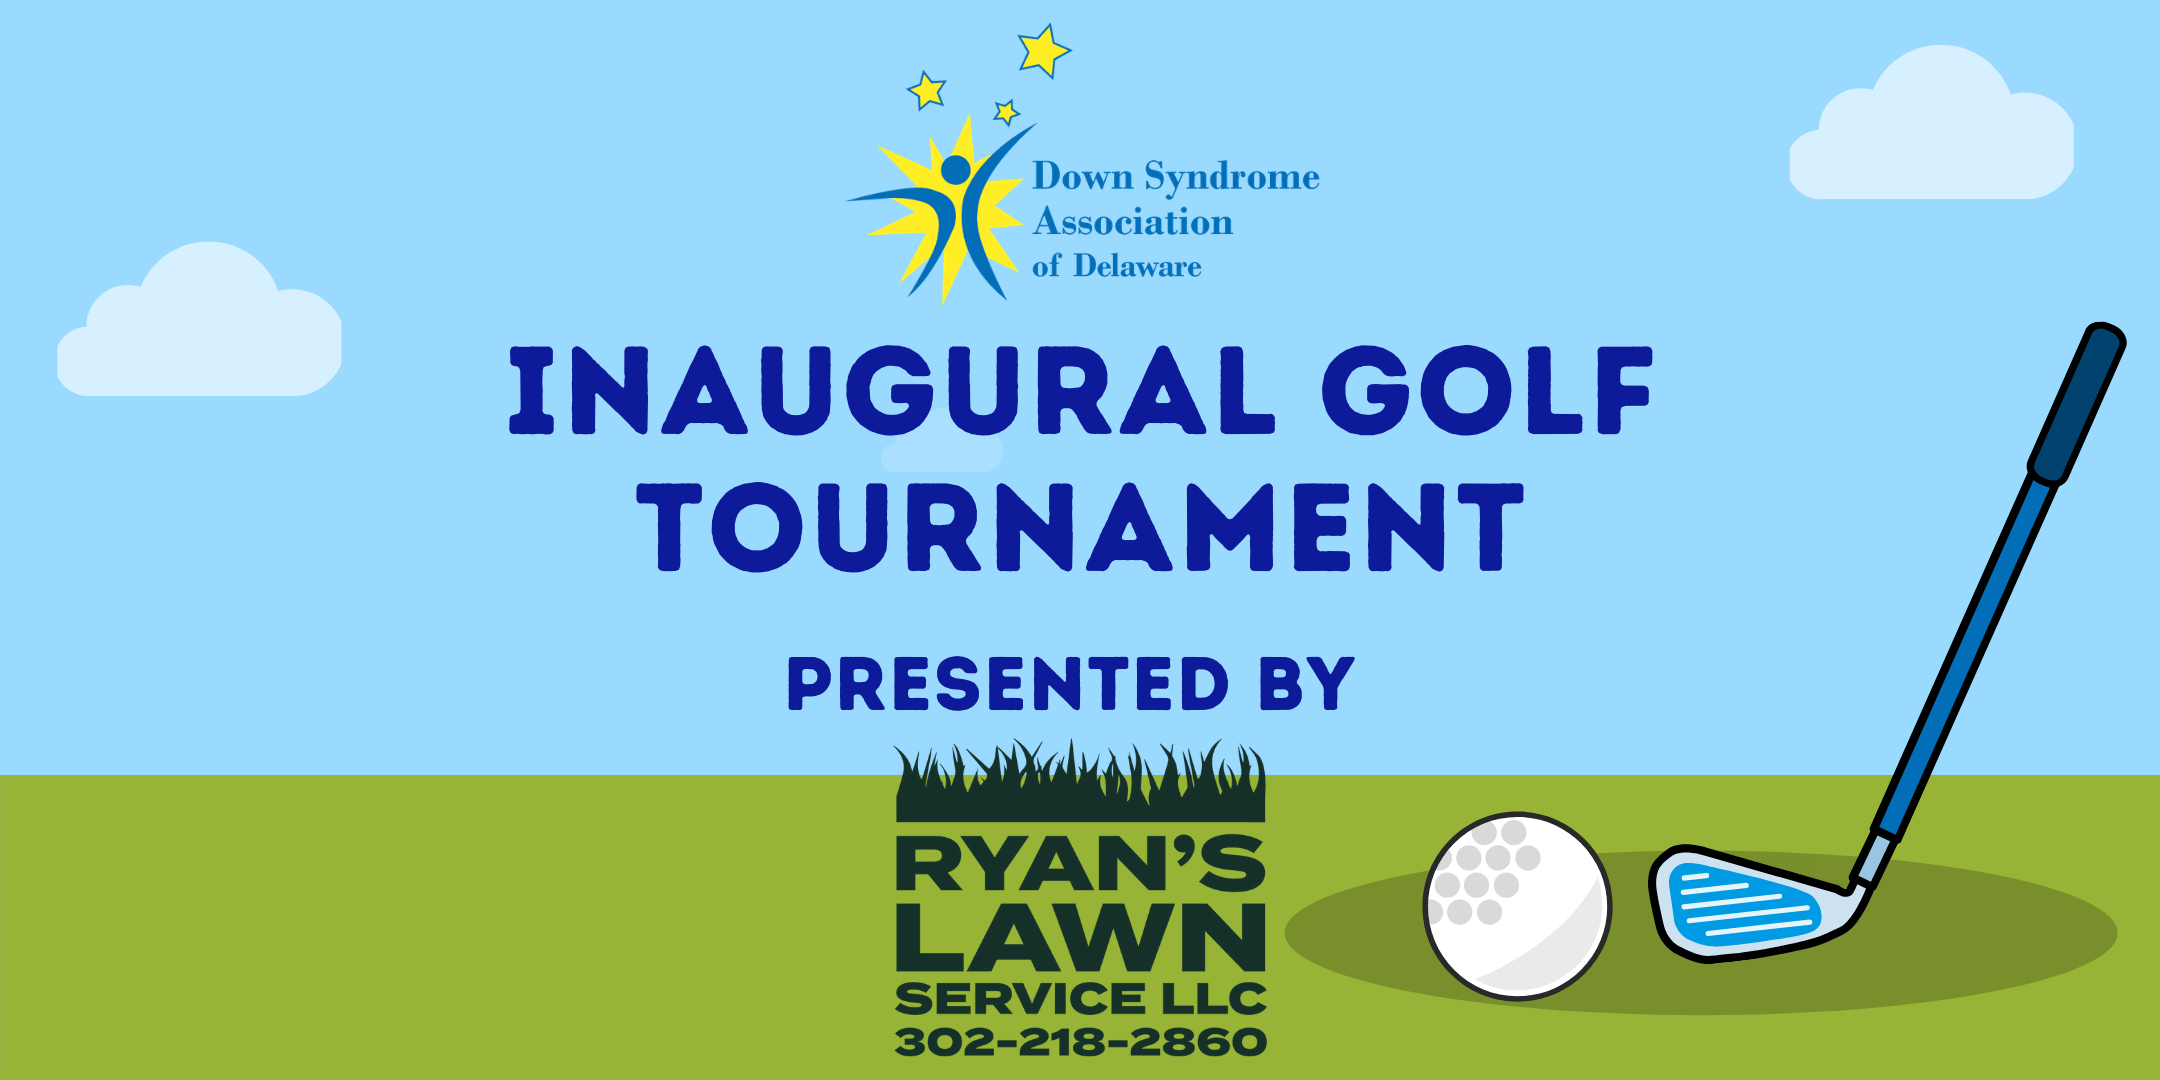 Inaugural Golf Tournament Presented by Ryan’s Lawn Service LLC